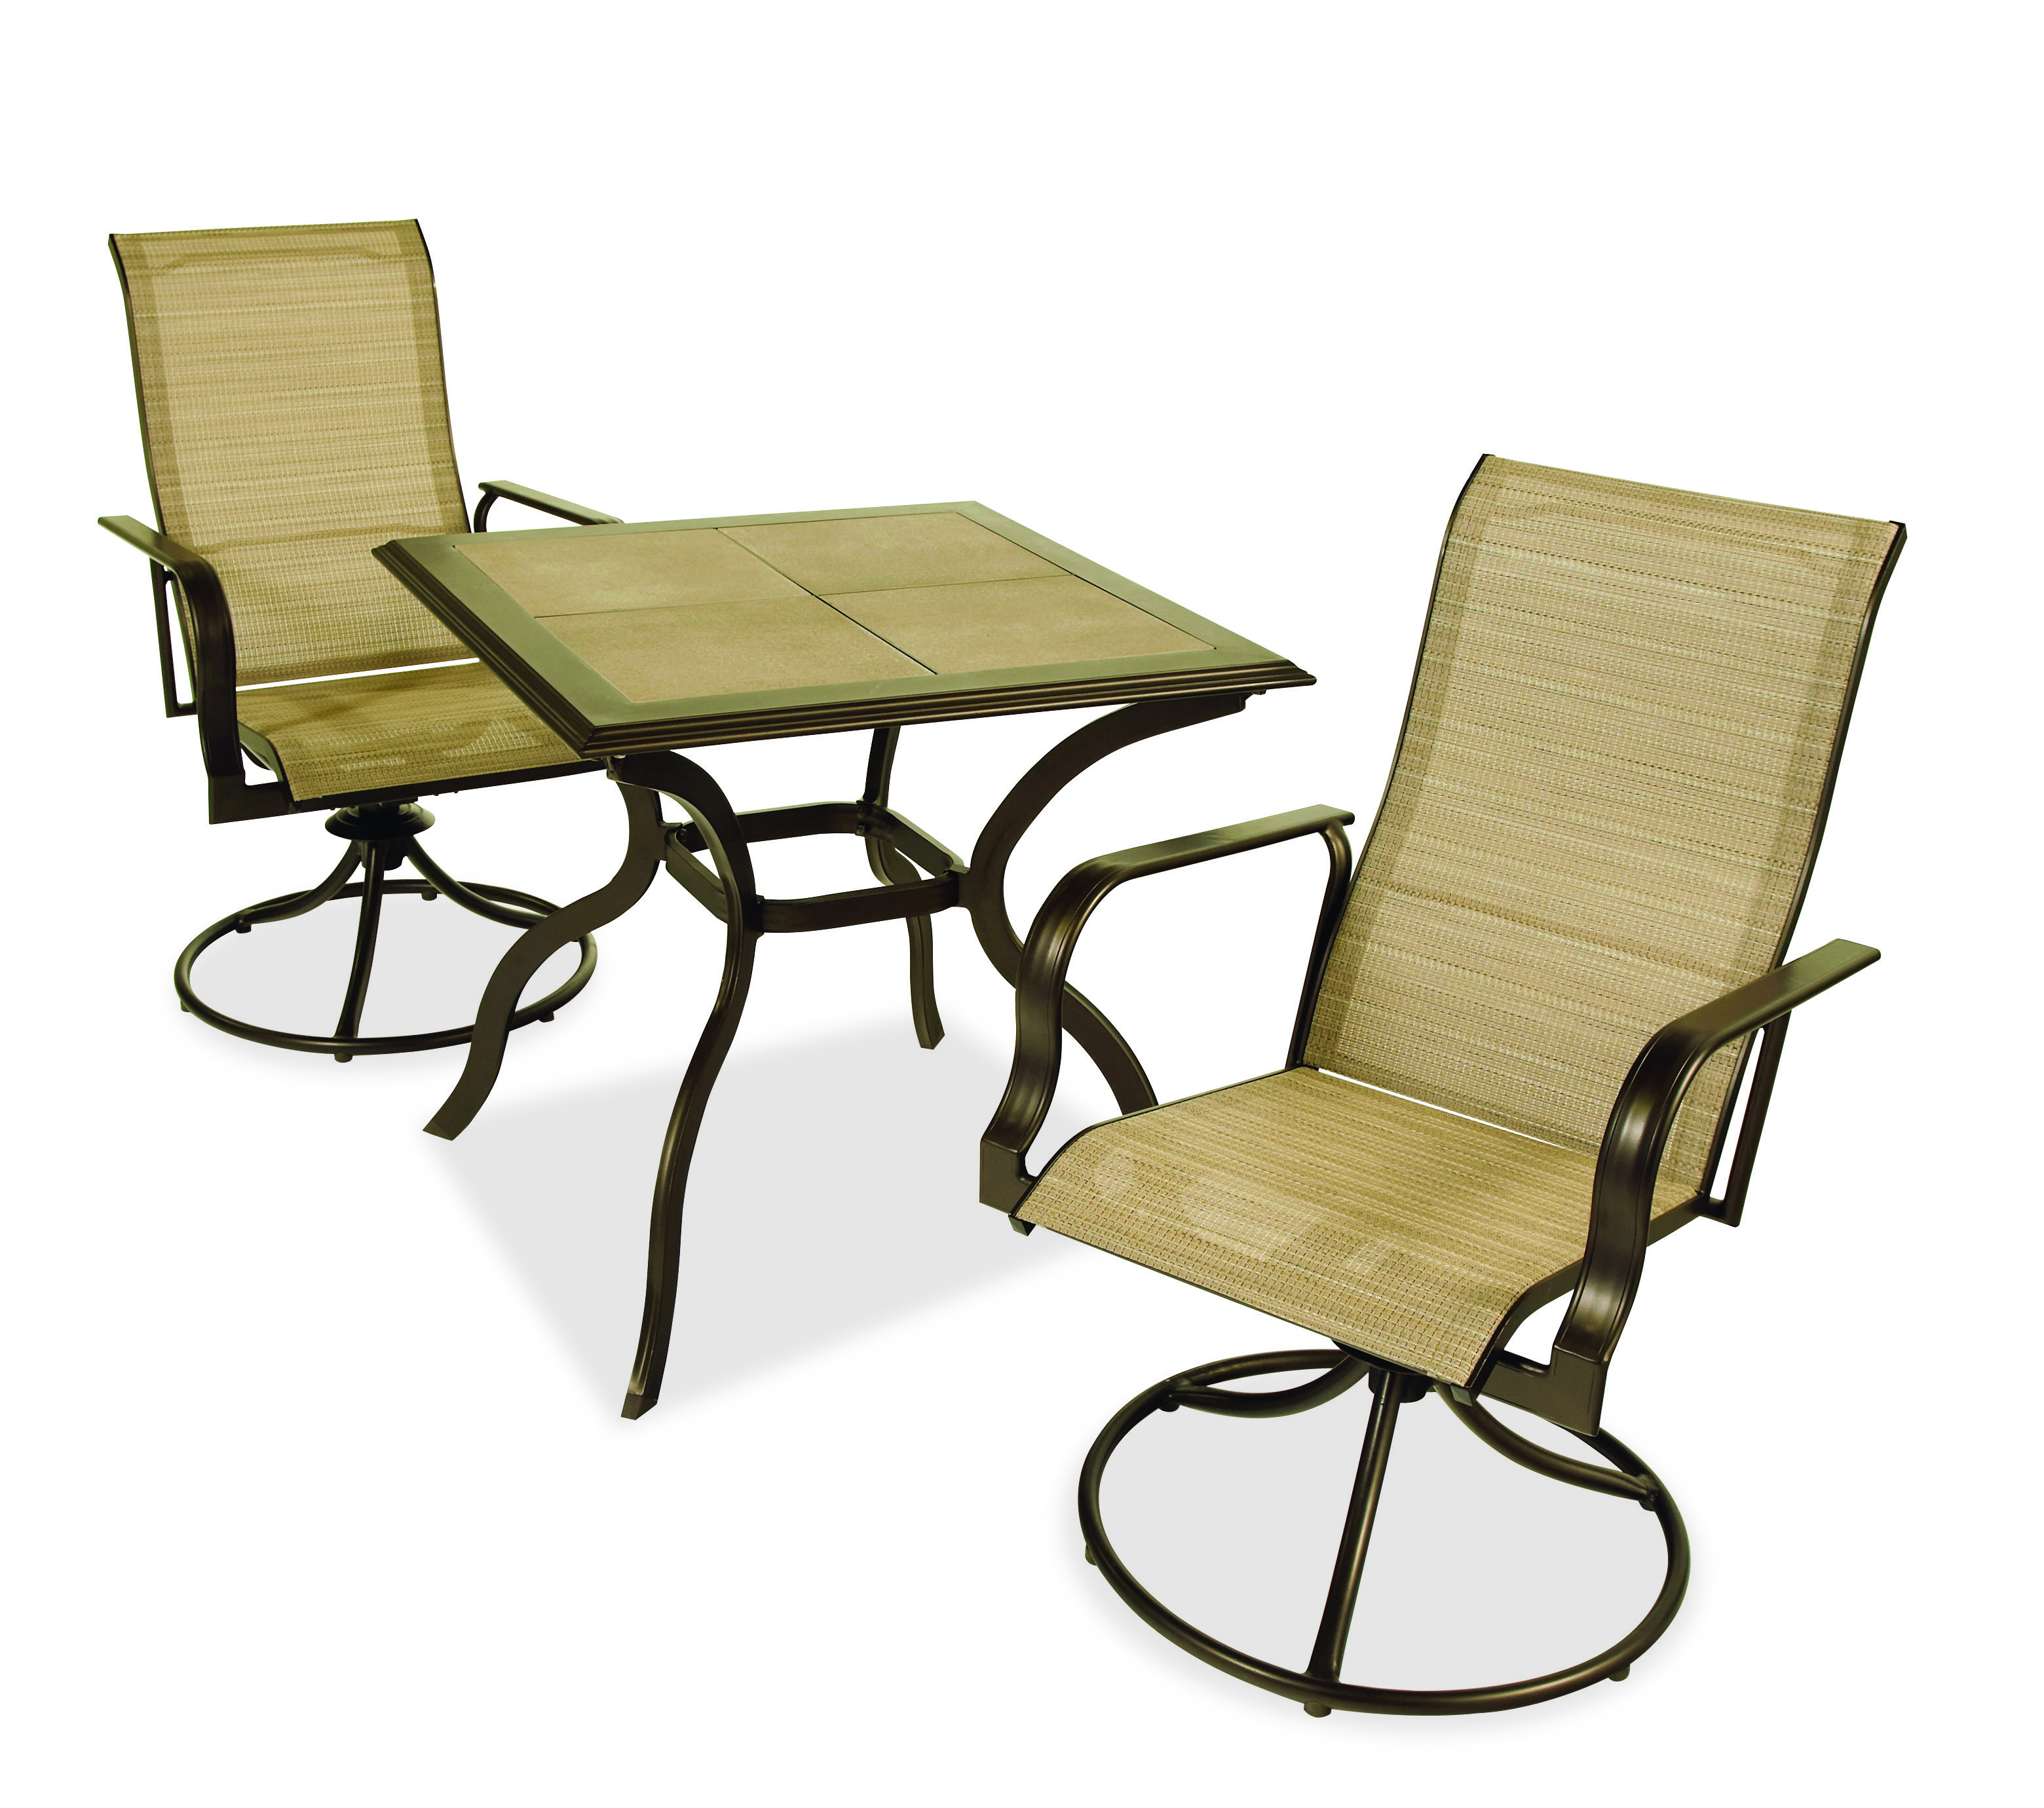 Casual Living Worldwide Recalls Swivel Patio Chairs Due To Fall regarding dimensions 3120 X 2760